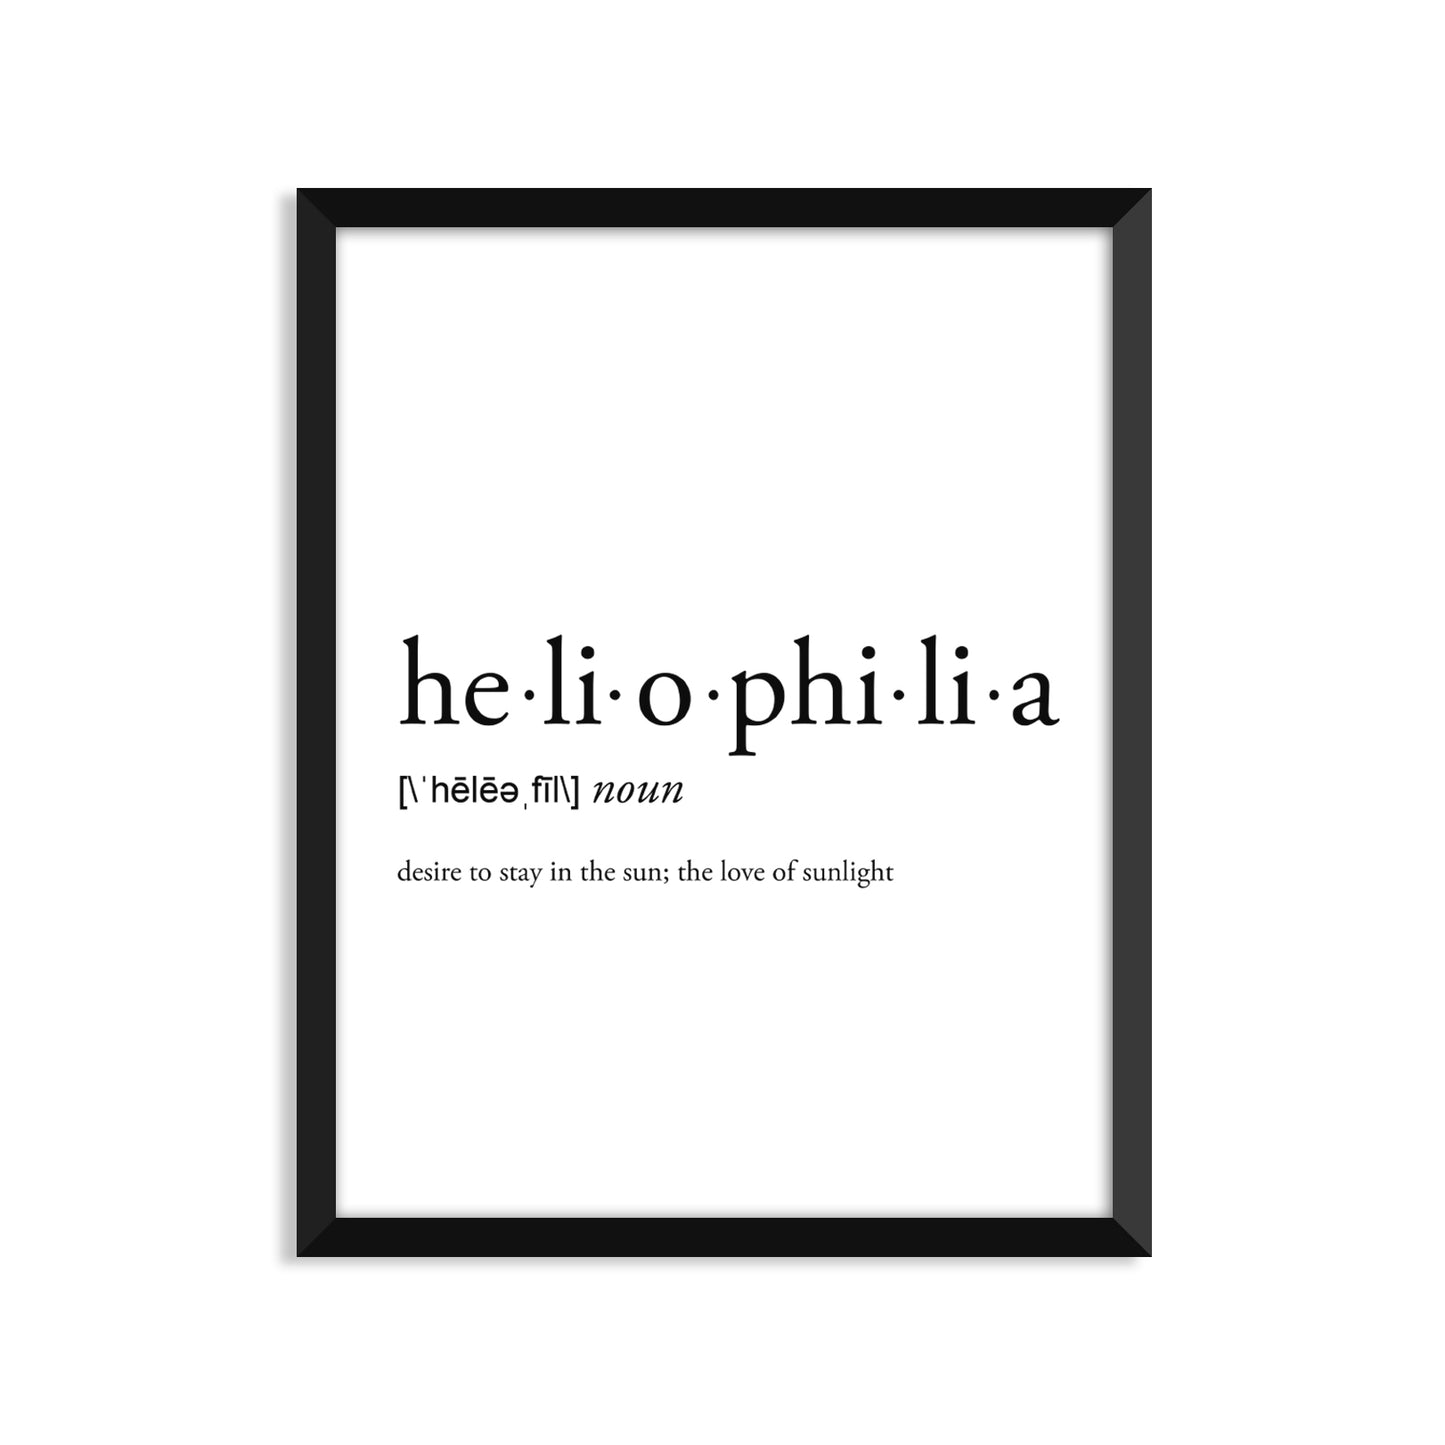 Heliophilia Definition Everyday Card